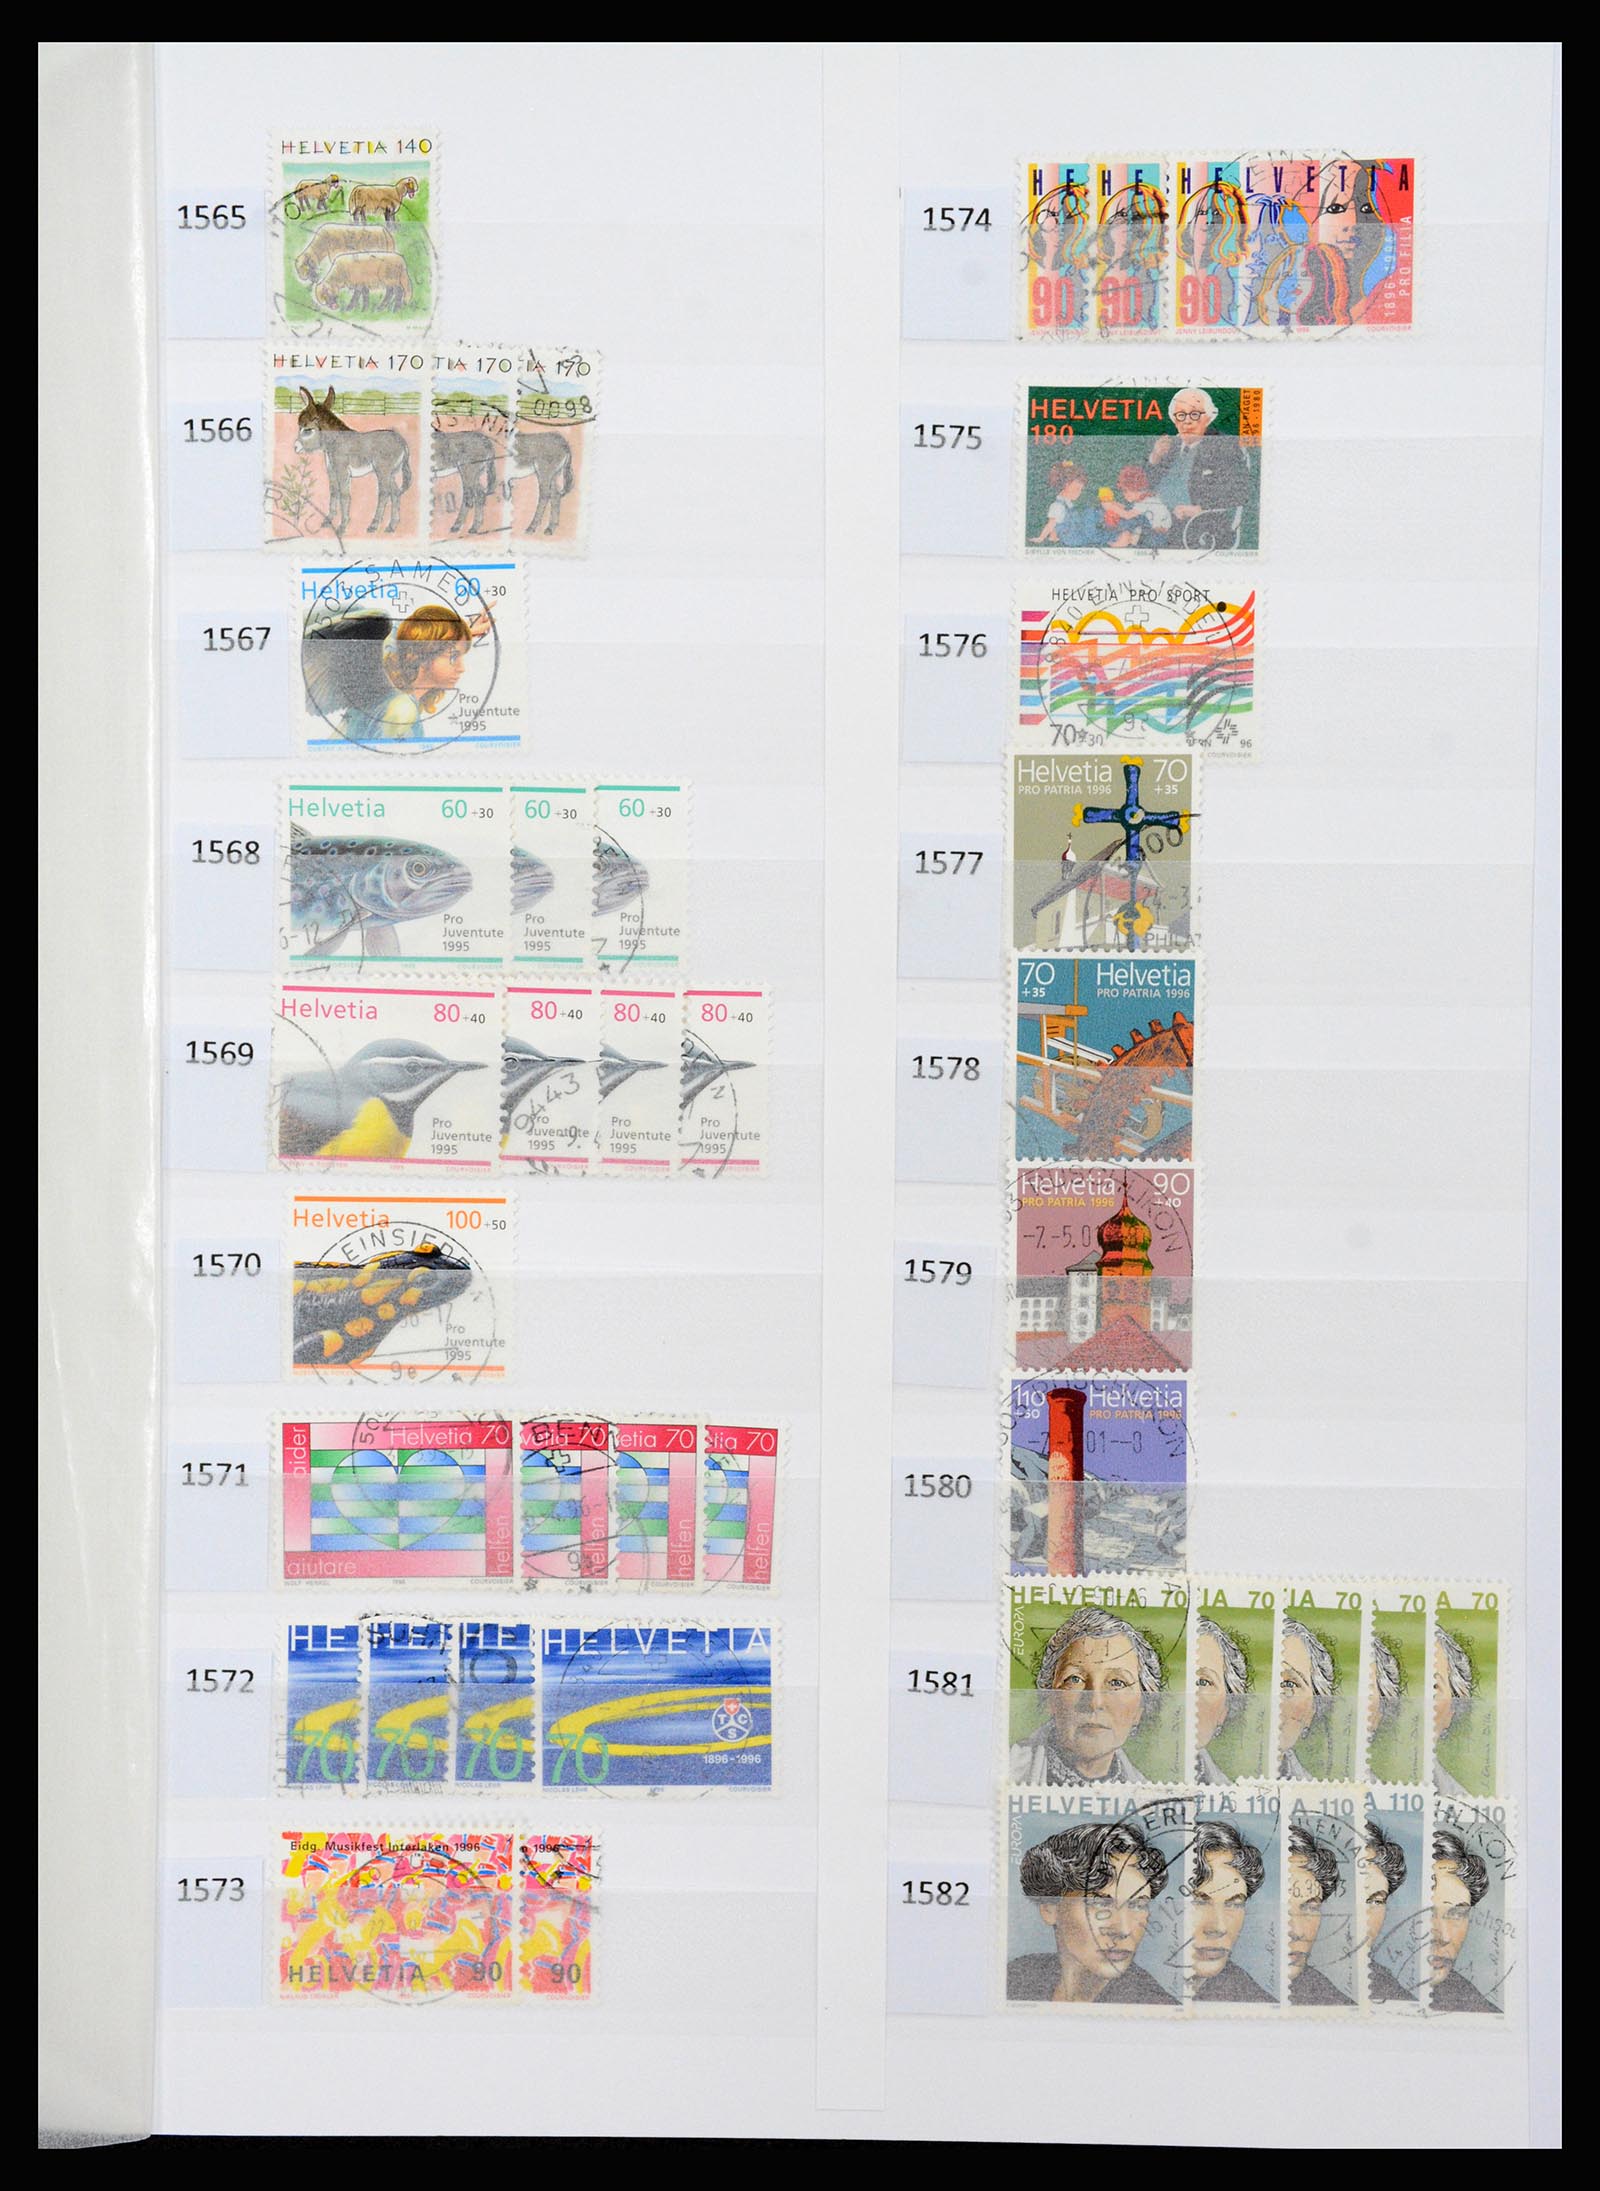 37252 088 - Stamp collection 37252 Switzerland 1900-2011.